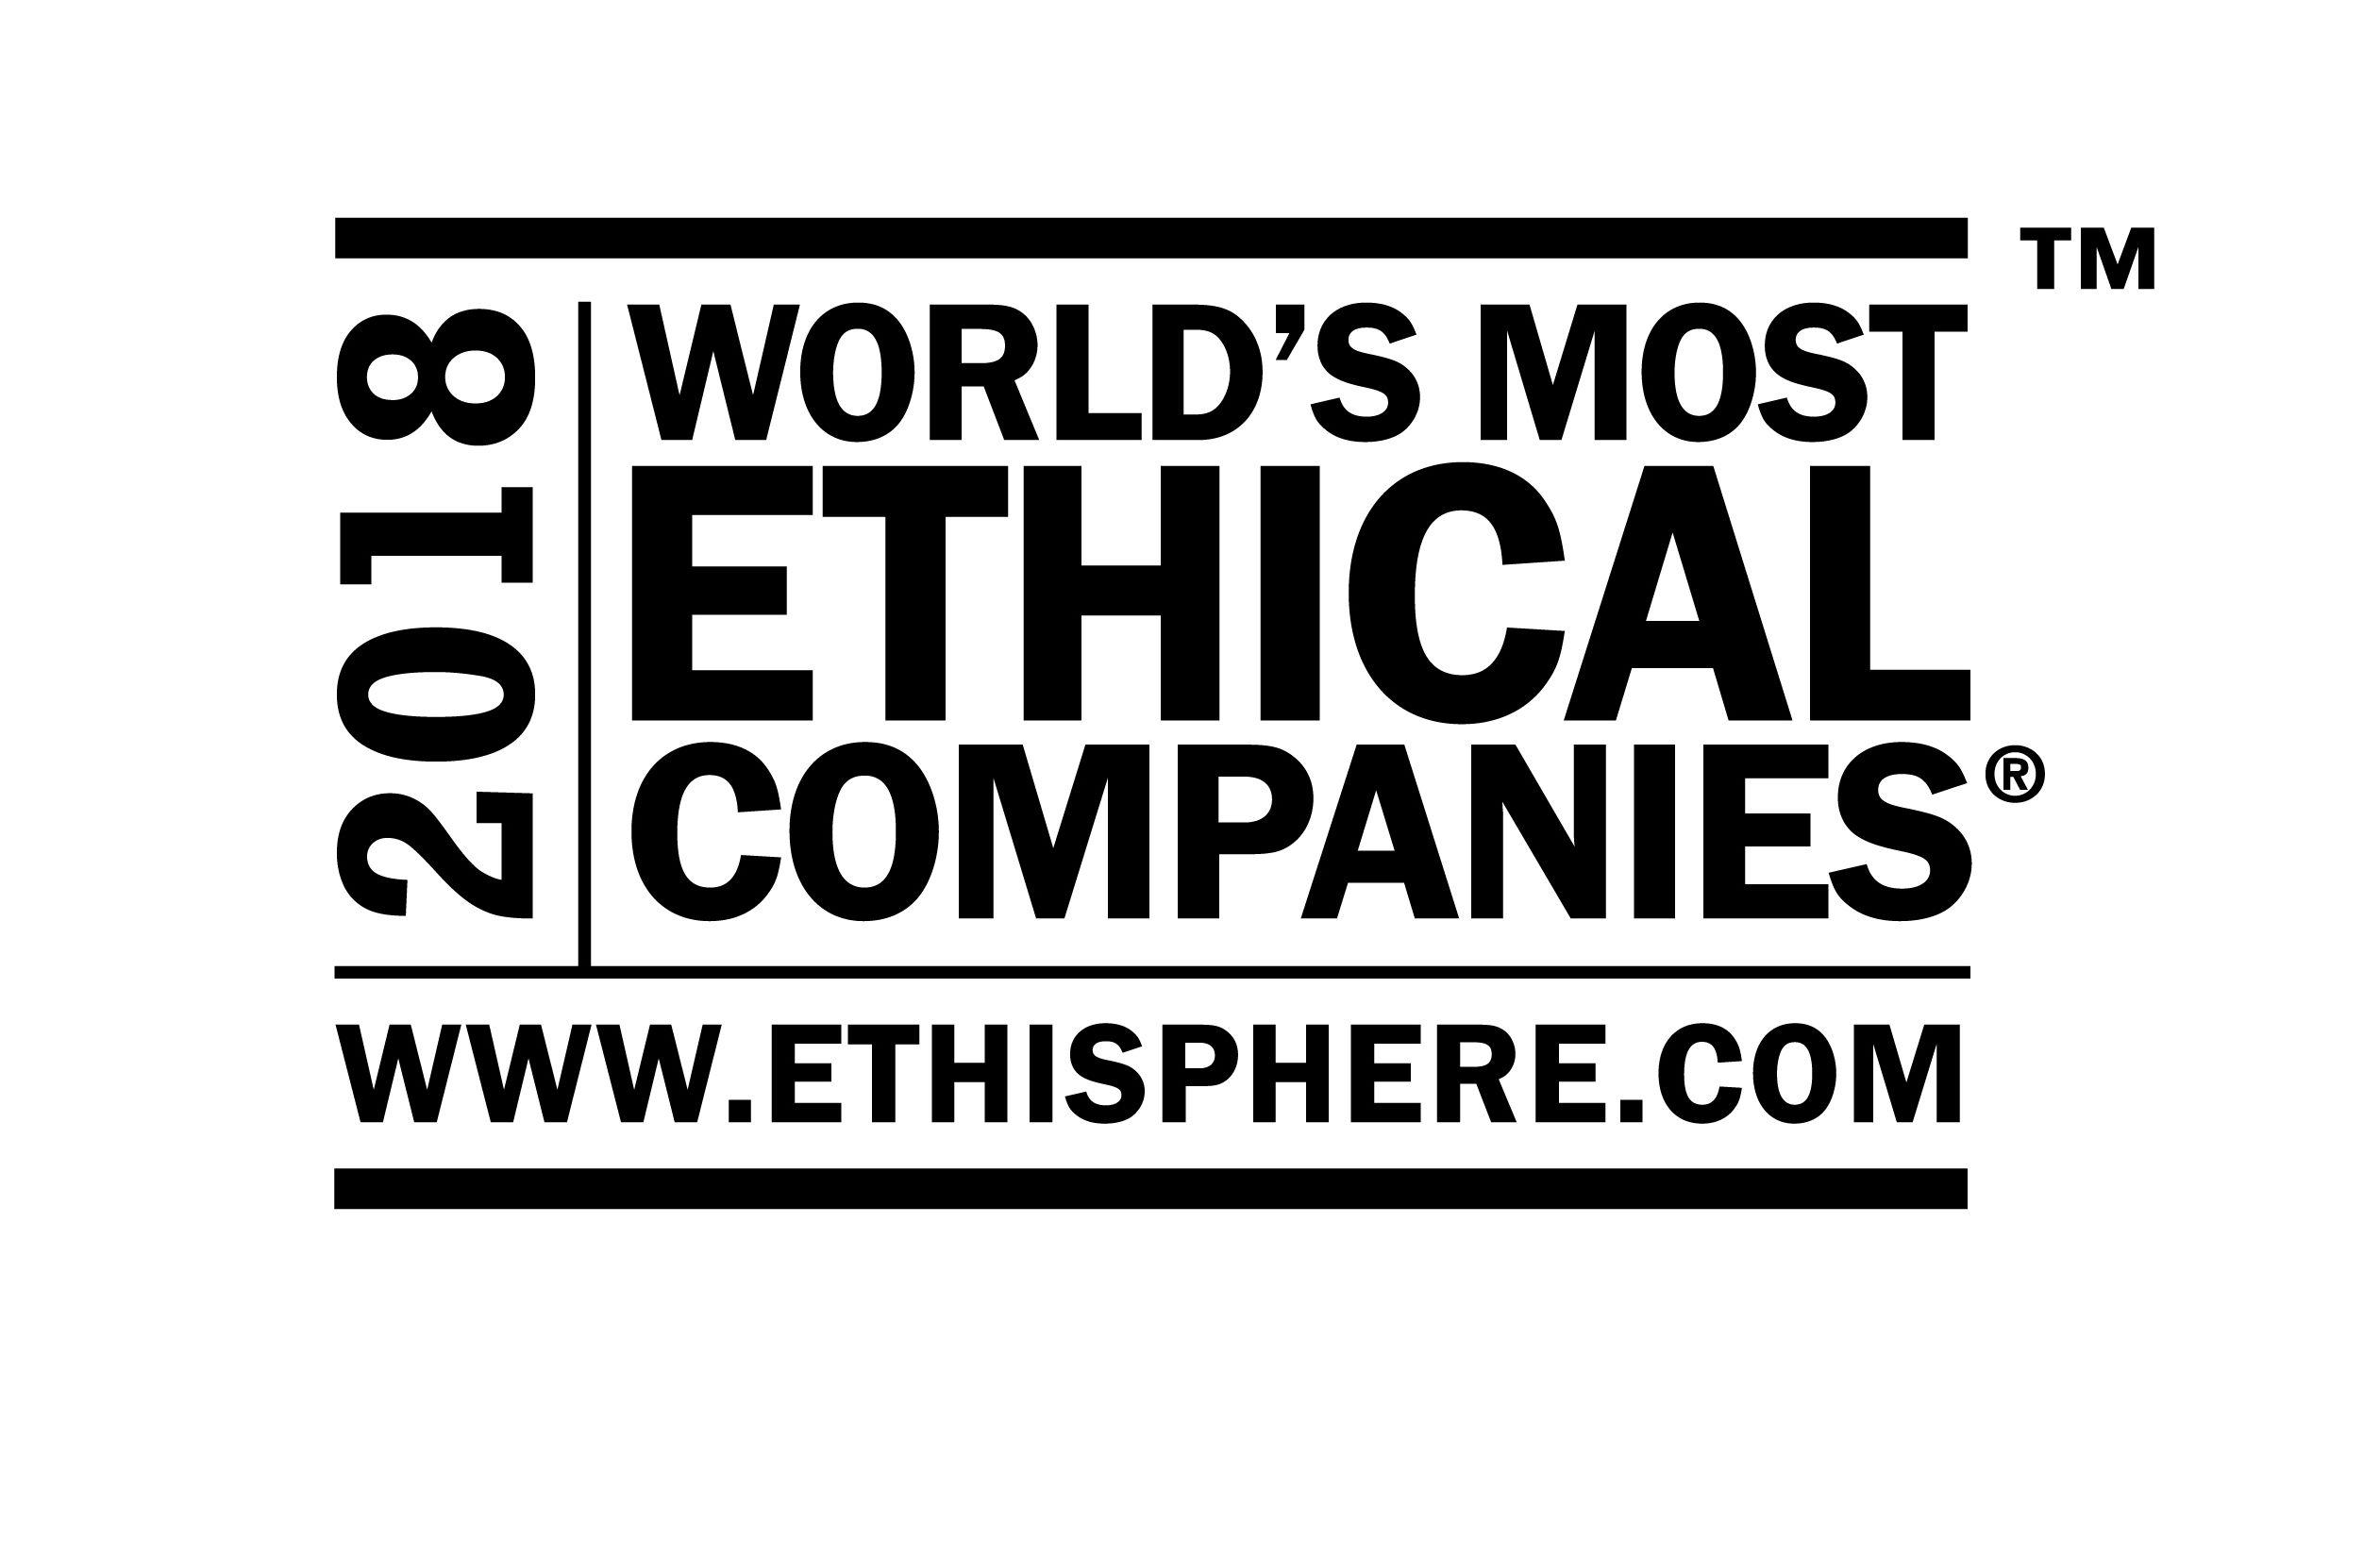 Ethisphere Award Logo - Nokia named one of the World's Most Ethical Companies | Nokia